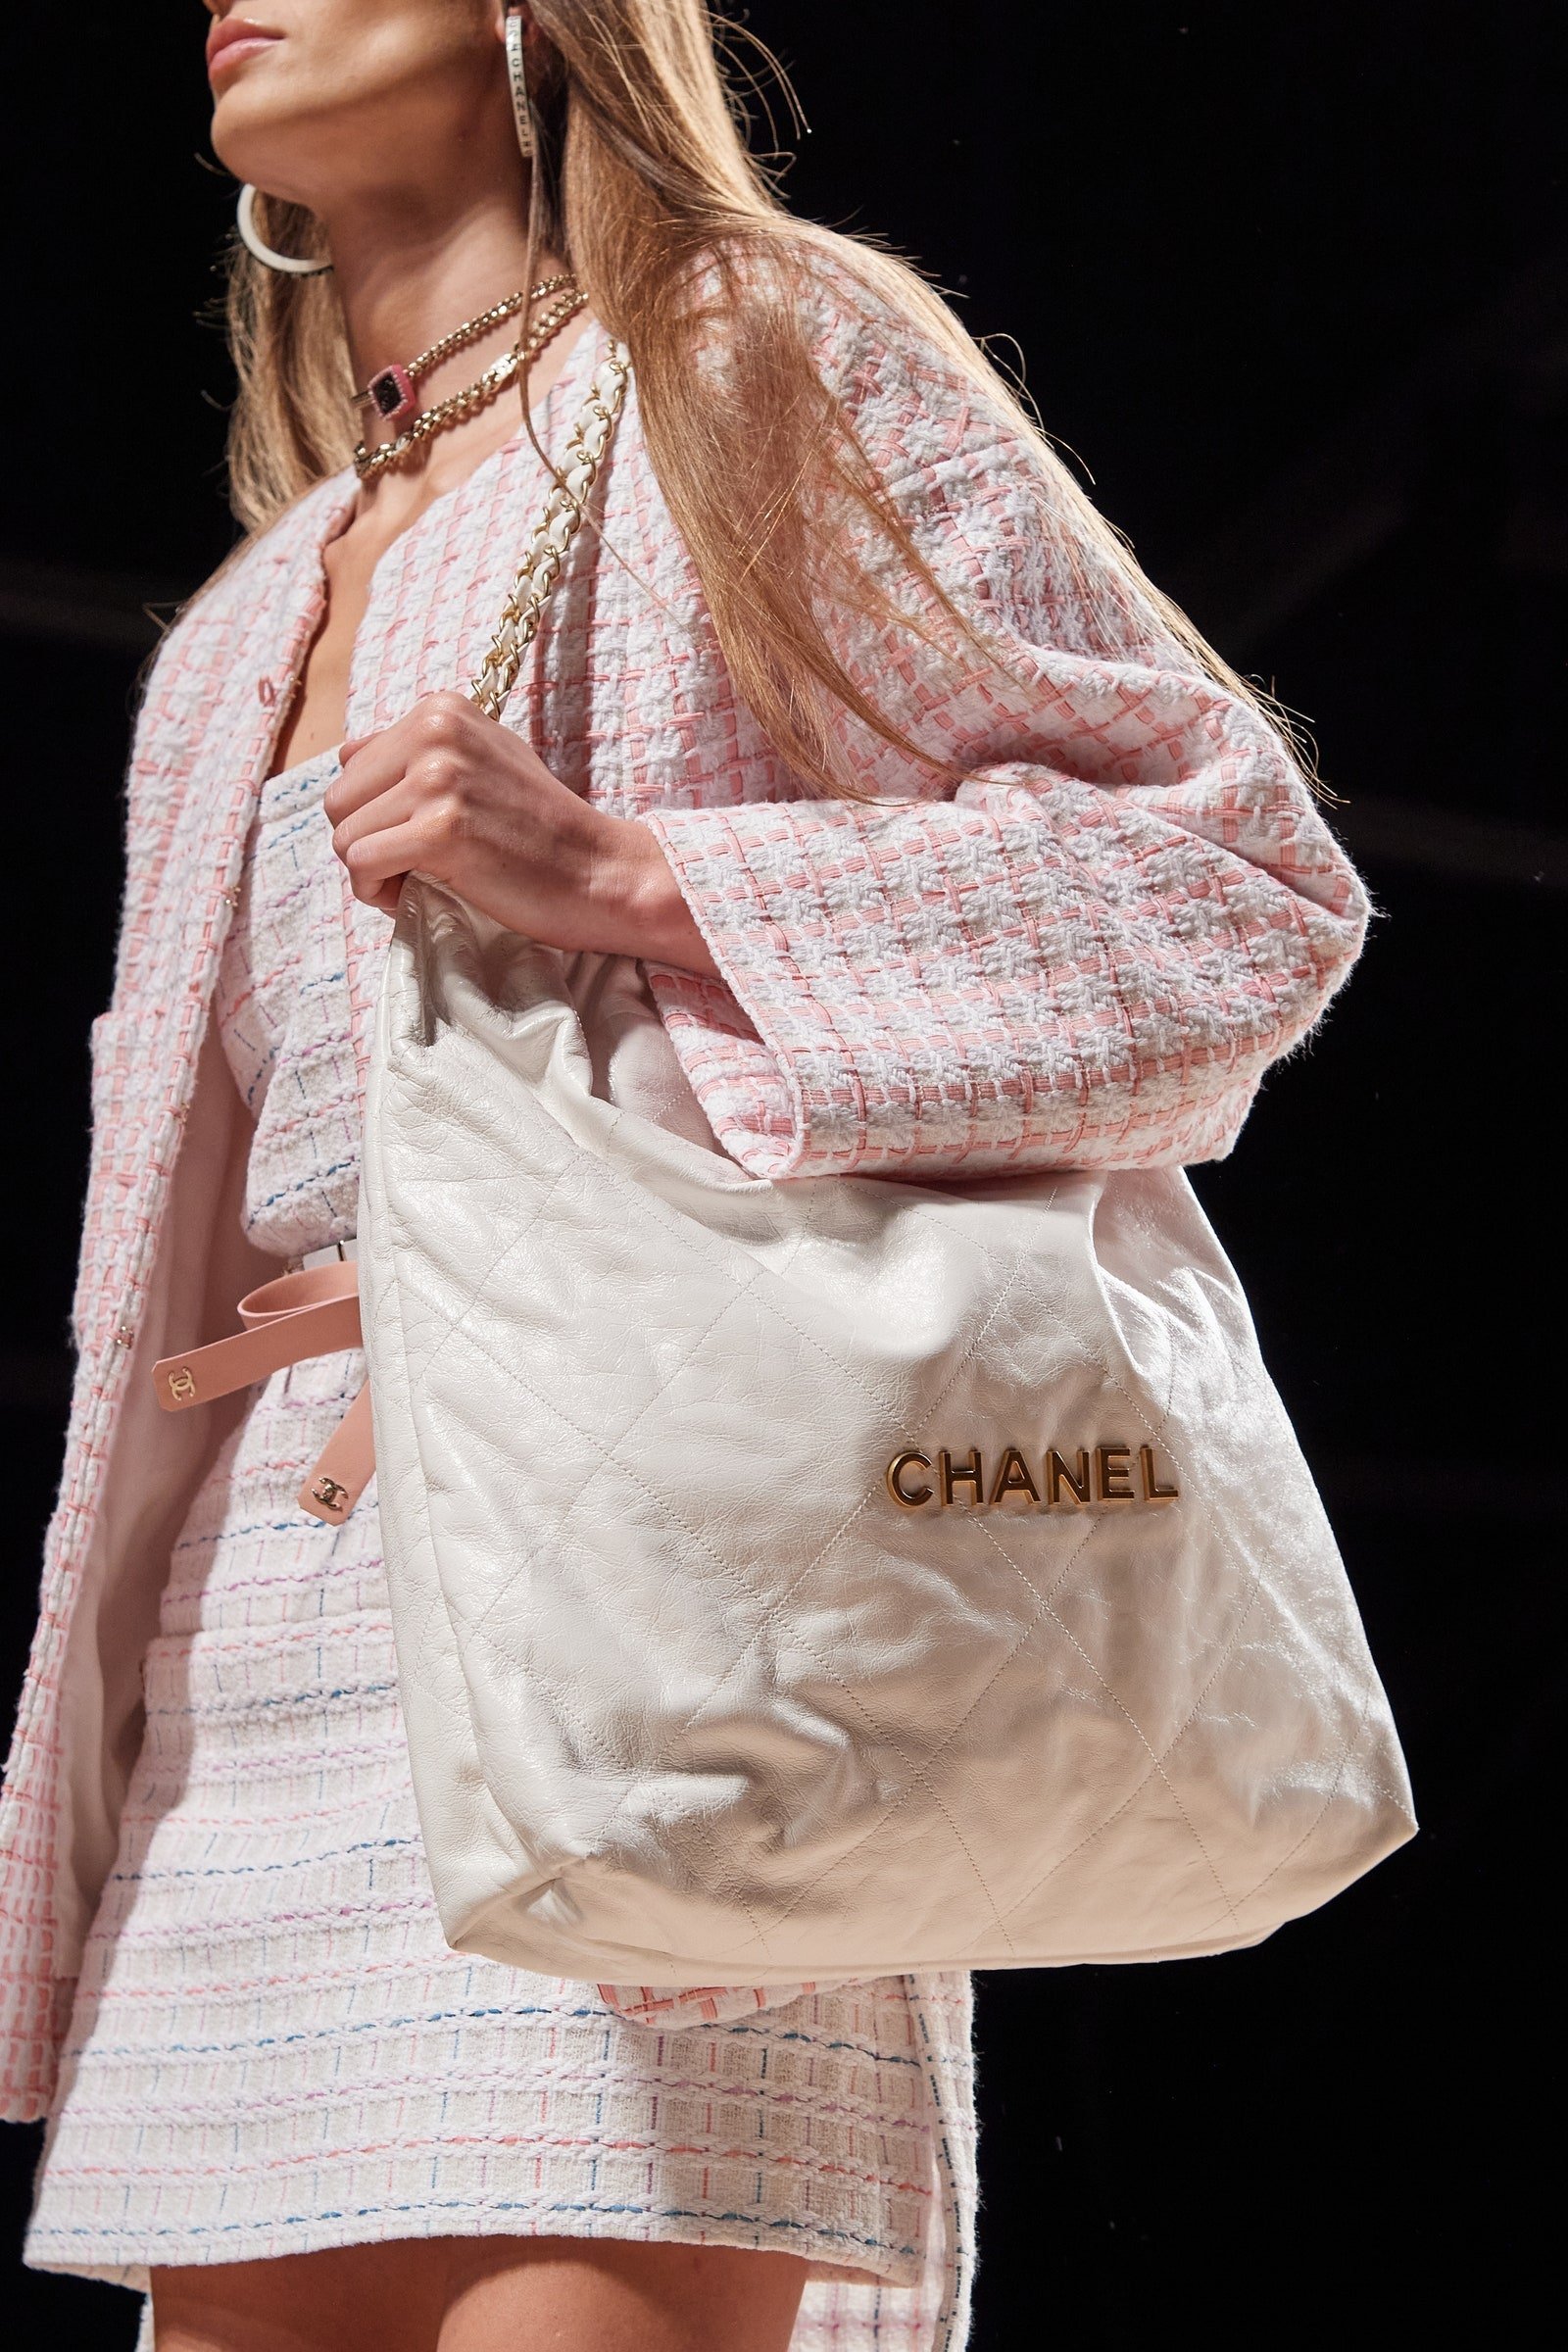 00054-Chanel-Spring-22-RTW-details-Paris-credit-gorunway.jpeg